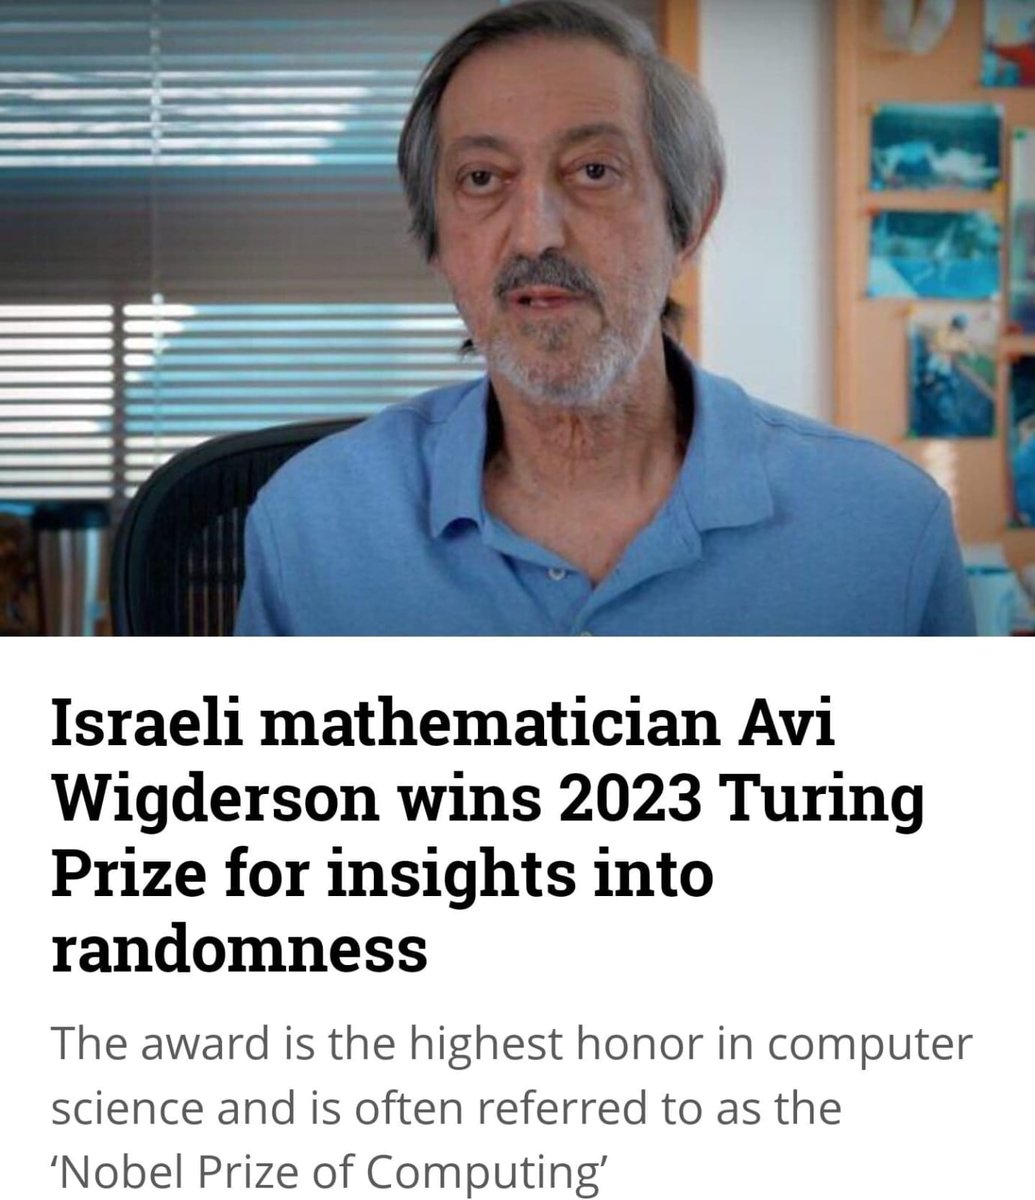 Israeli mathematician Avi Wigderson wins $1 million Turing Prize for insights into randomness.